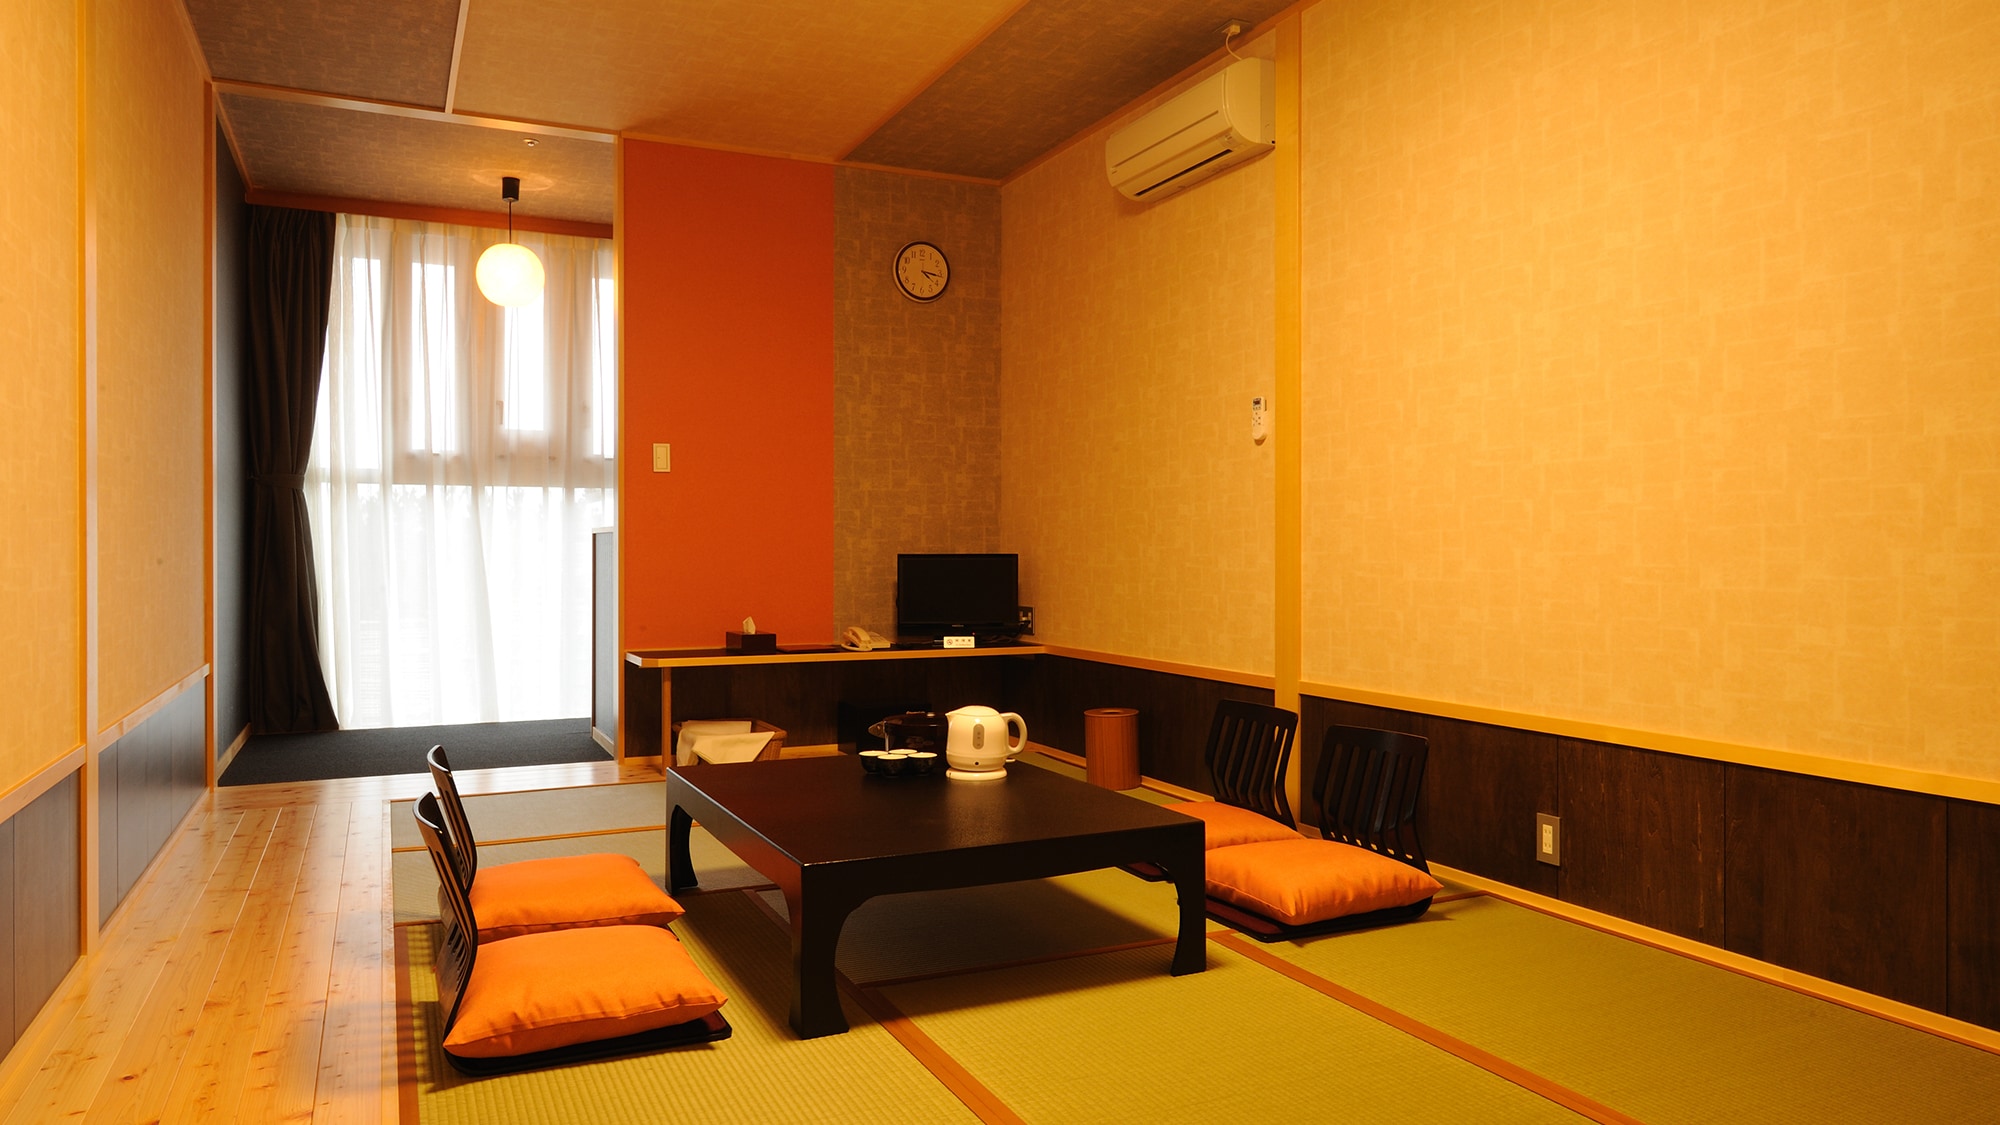 Kamar tamu modern Jepang (non-merokok / dengan toilet / tanpa bak mandi)